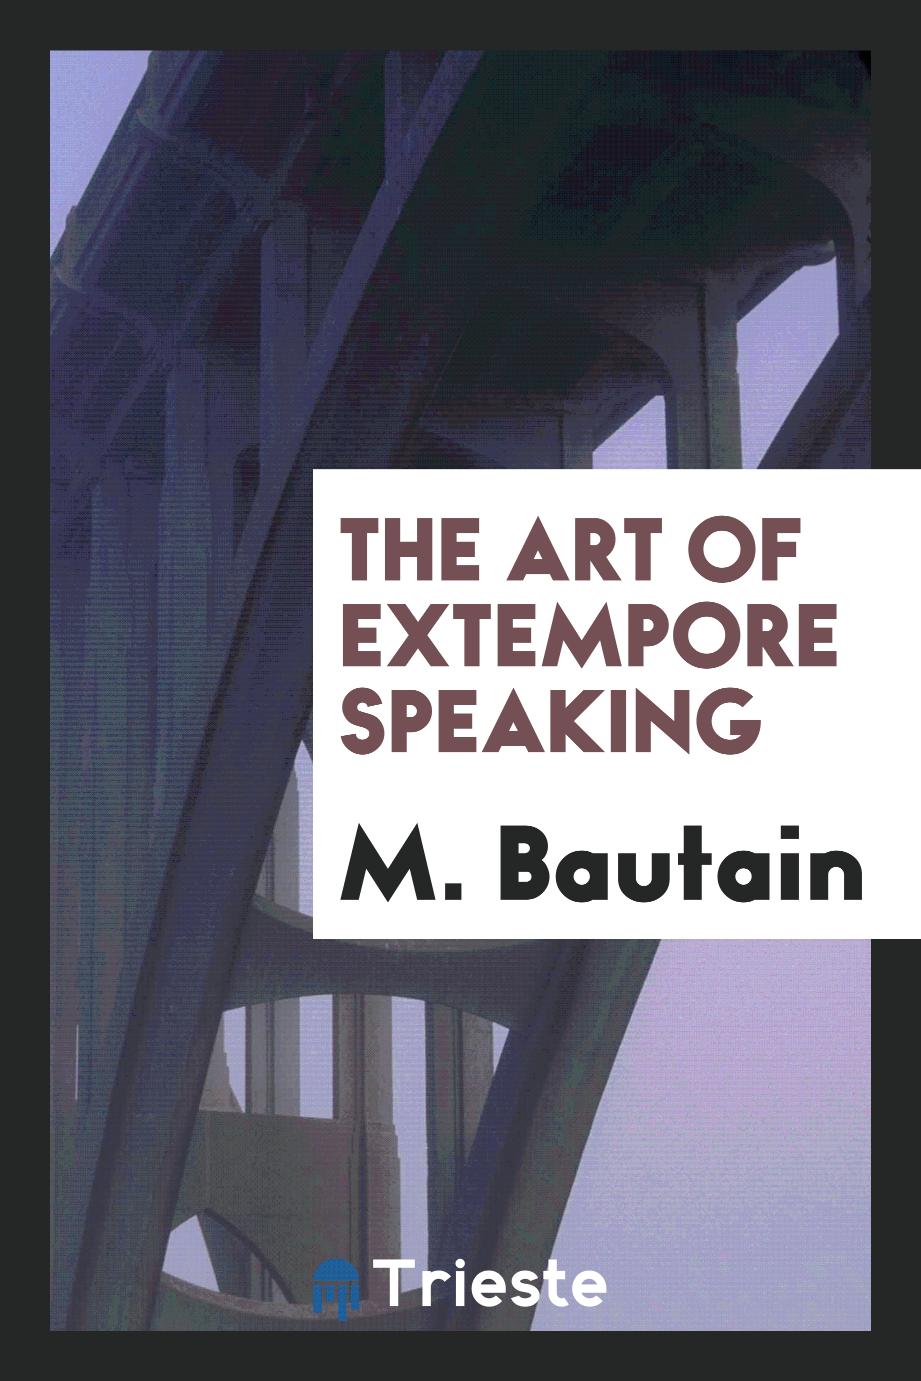 The art of extempore speaking